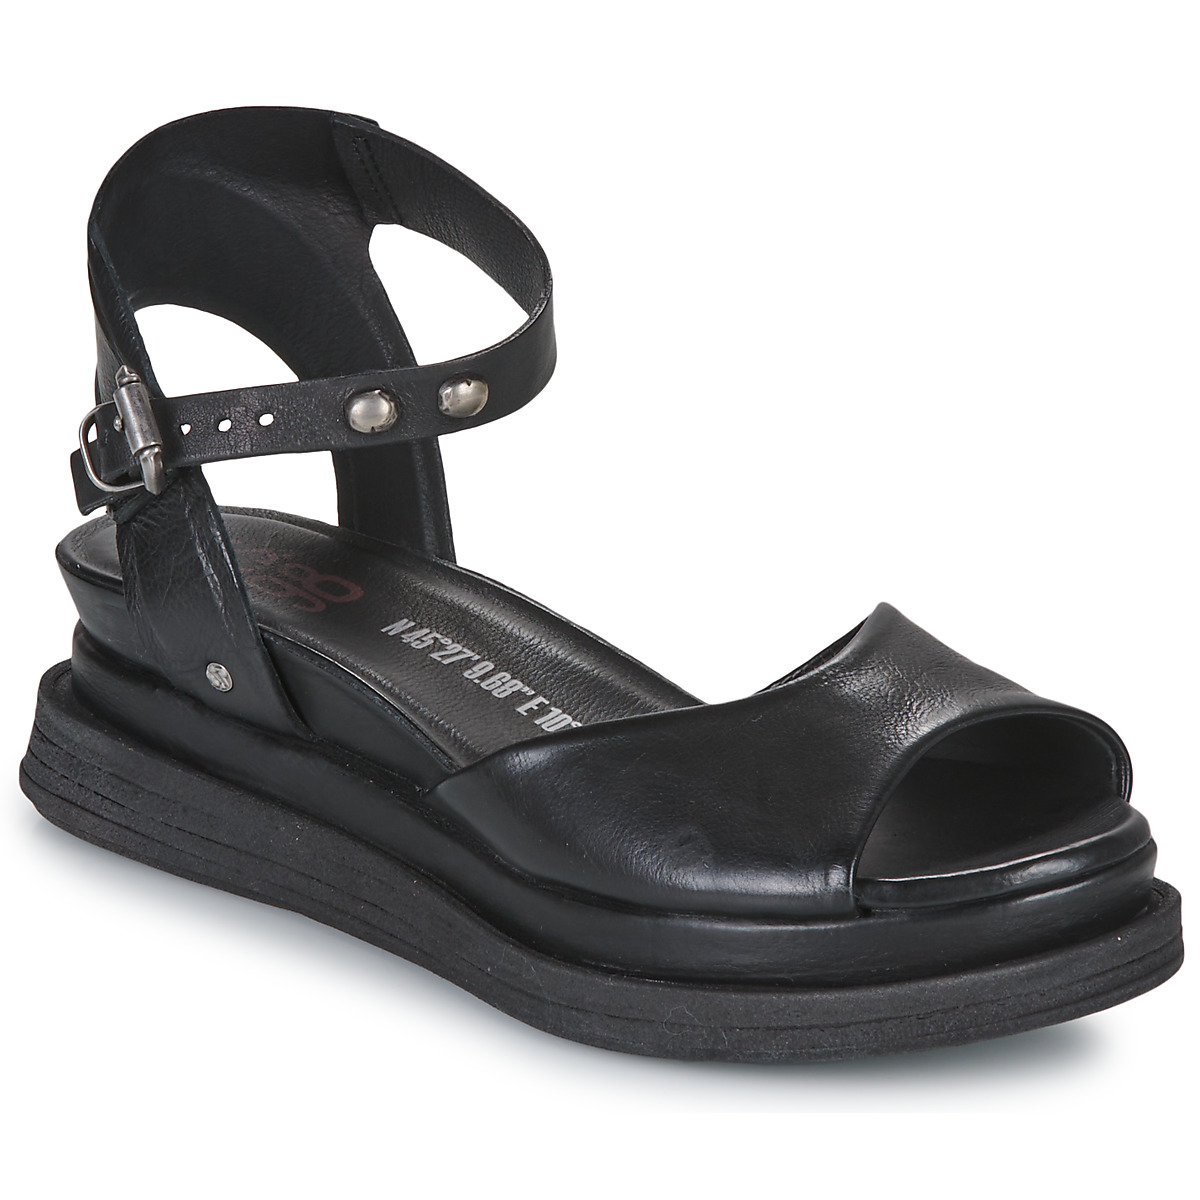 airstep / a.s.98  lagos 2.0 bride  women's sandals in black